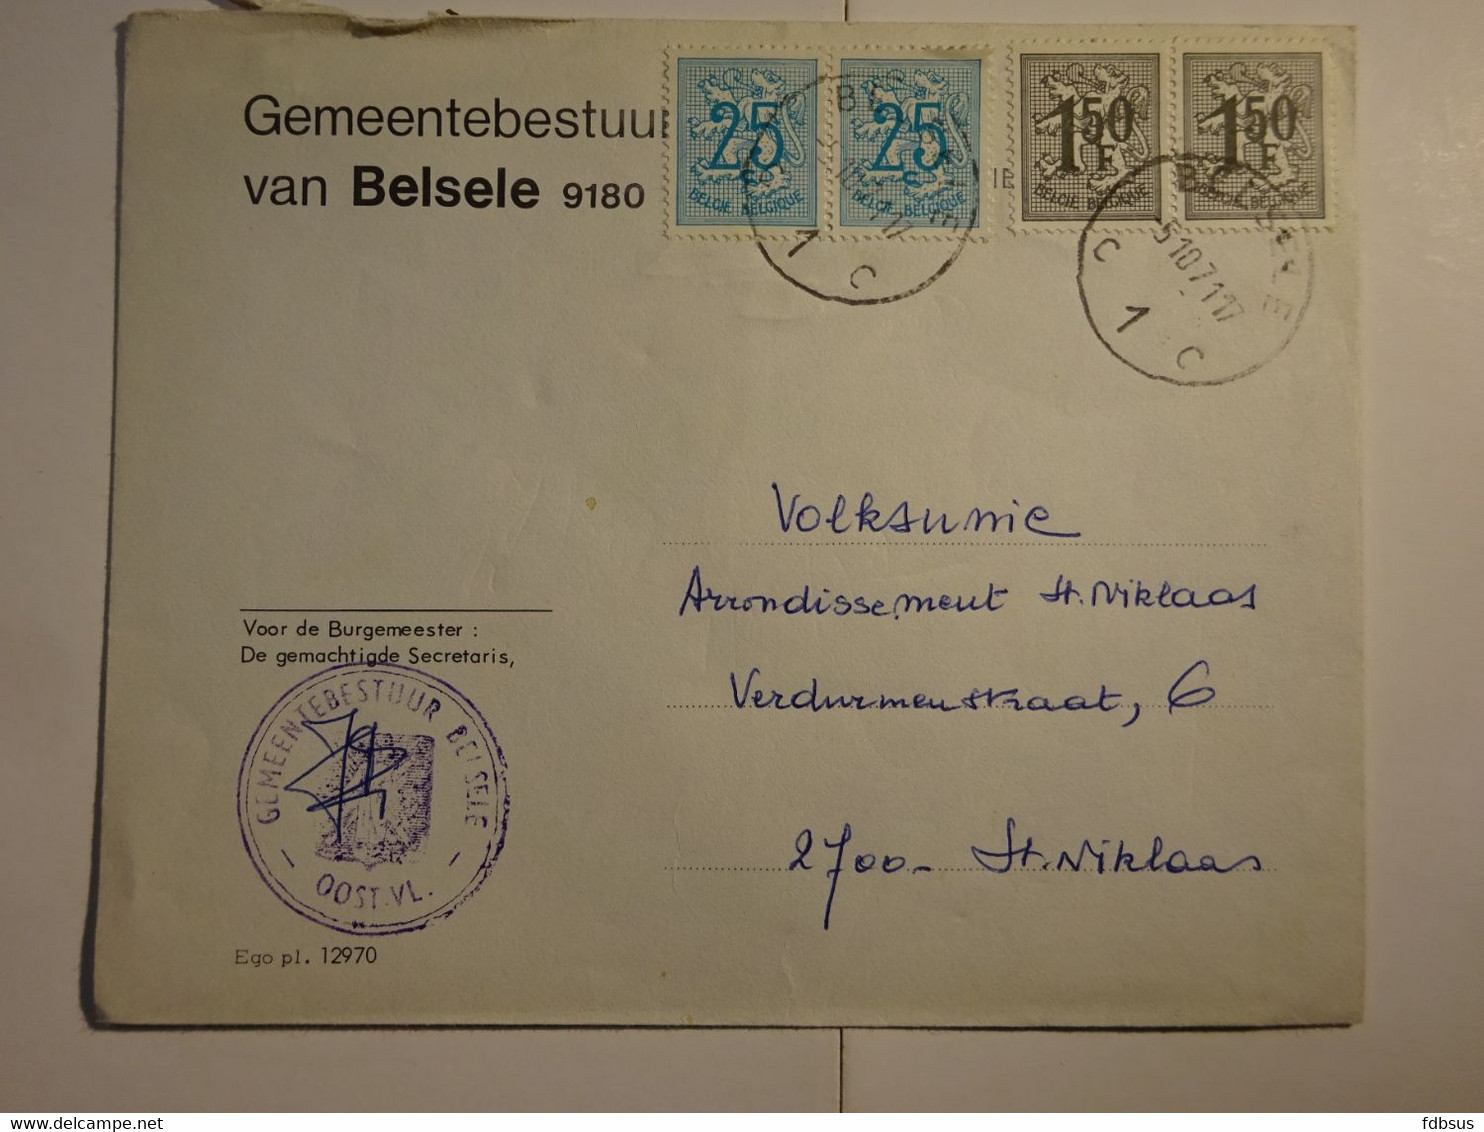 1971 Enveloppe Gemeentebestuur 9180 BELSELE Gefr. 2 X 25c + 2 X 1.50Fr - Zie Scan (s) Voor Zegels, Stempels En Andere - 1977-1985 Zahl Auf Löwe (Chiffre Sur Lion)